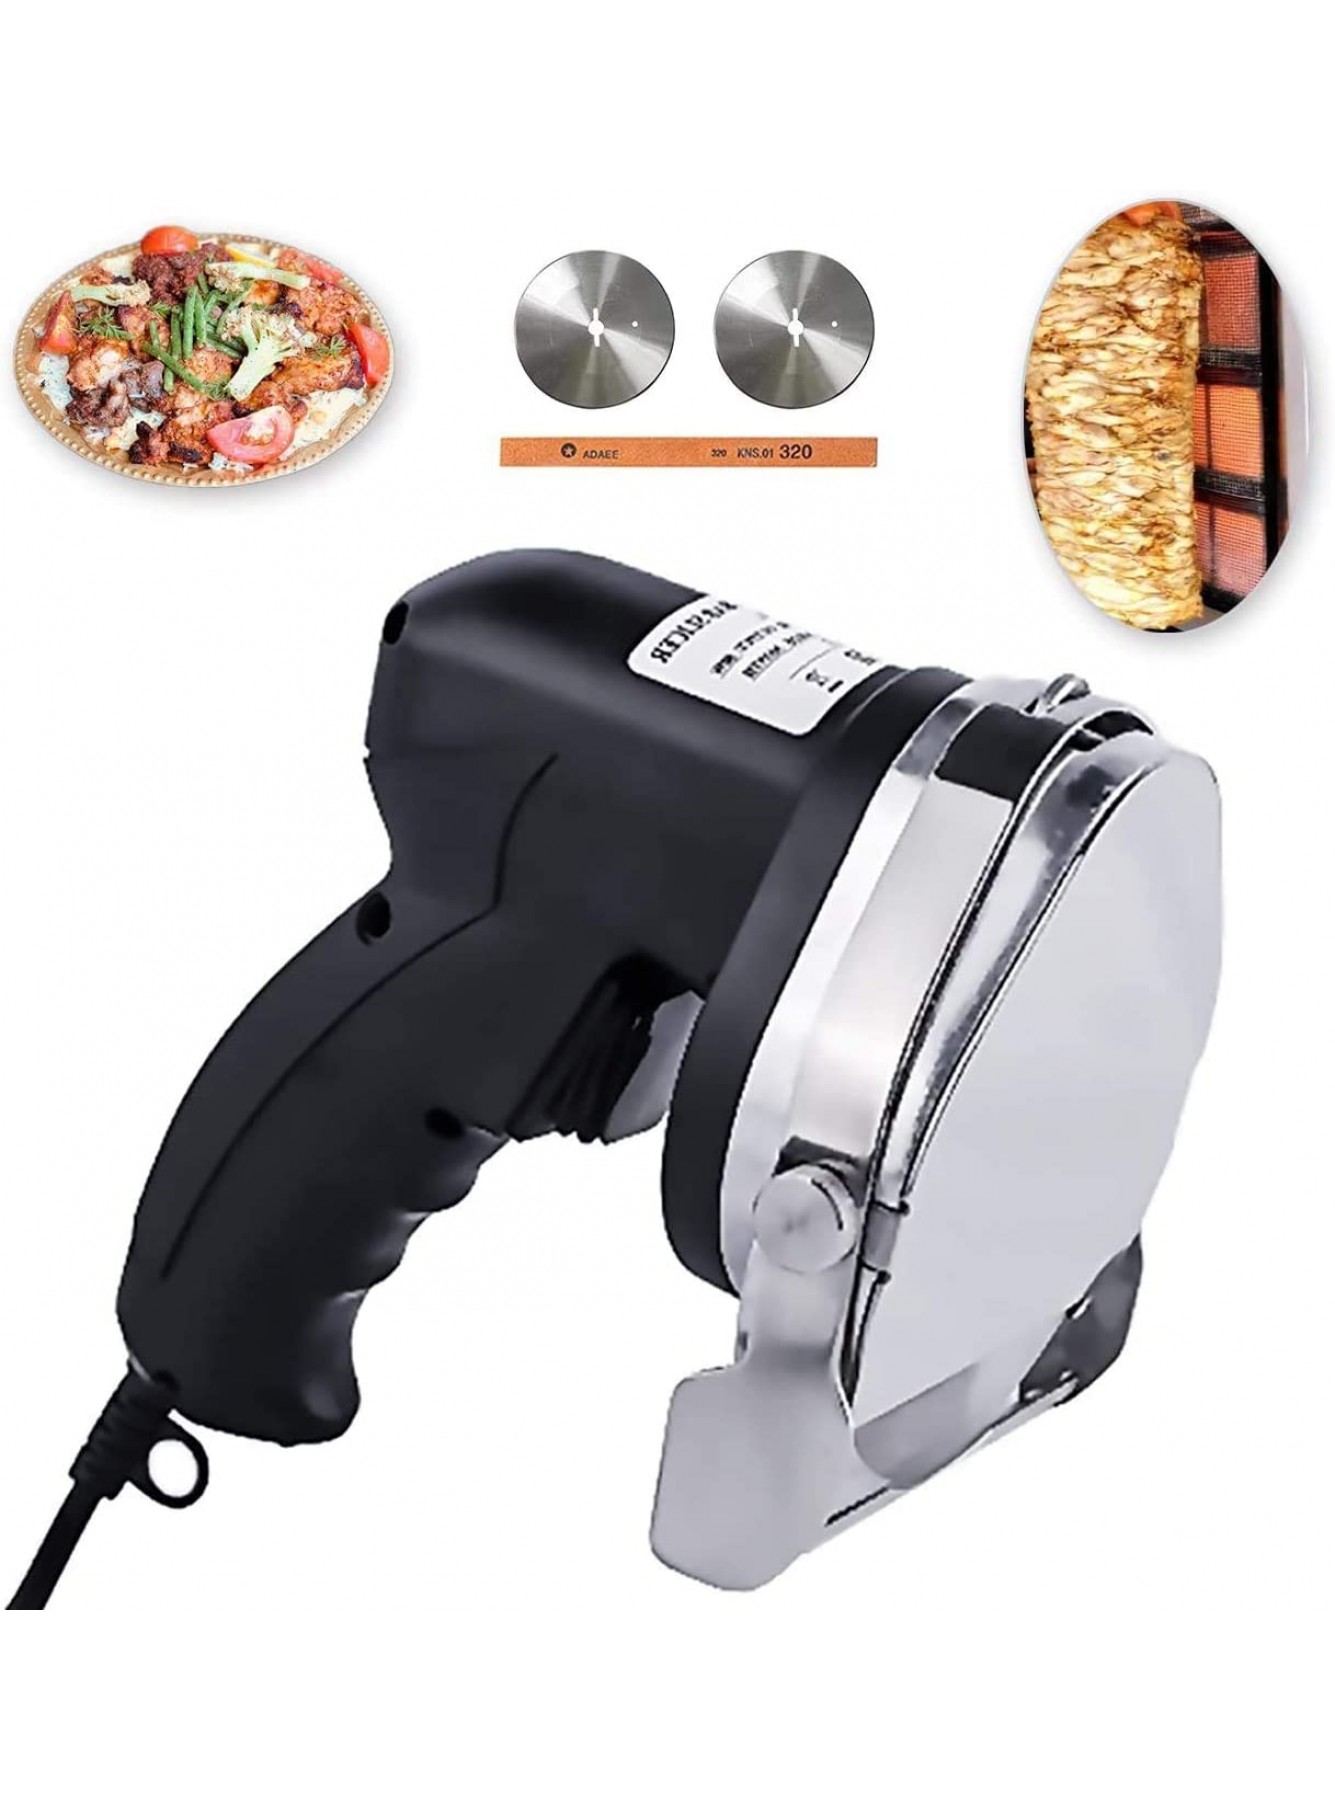 NJTFHU Handheld Gyros Knife Electric Kebab Slicer Shawarma Cutter 60KG Slicing Capacity with 2 Blades 110V for Home or Restaurant B085PQFTDG